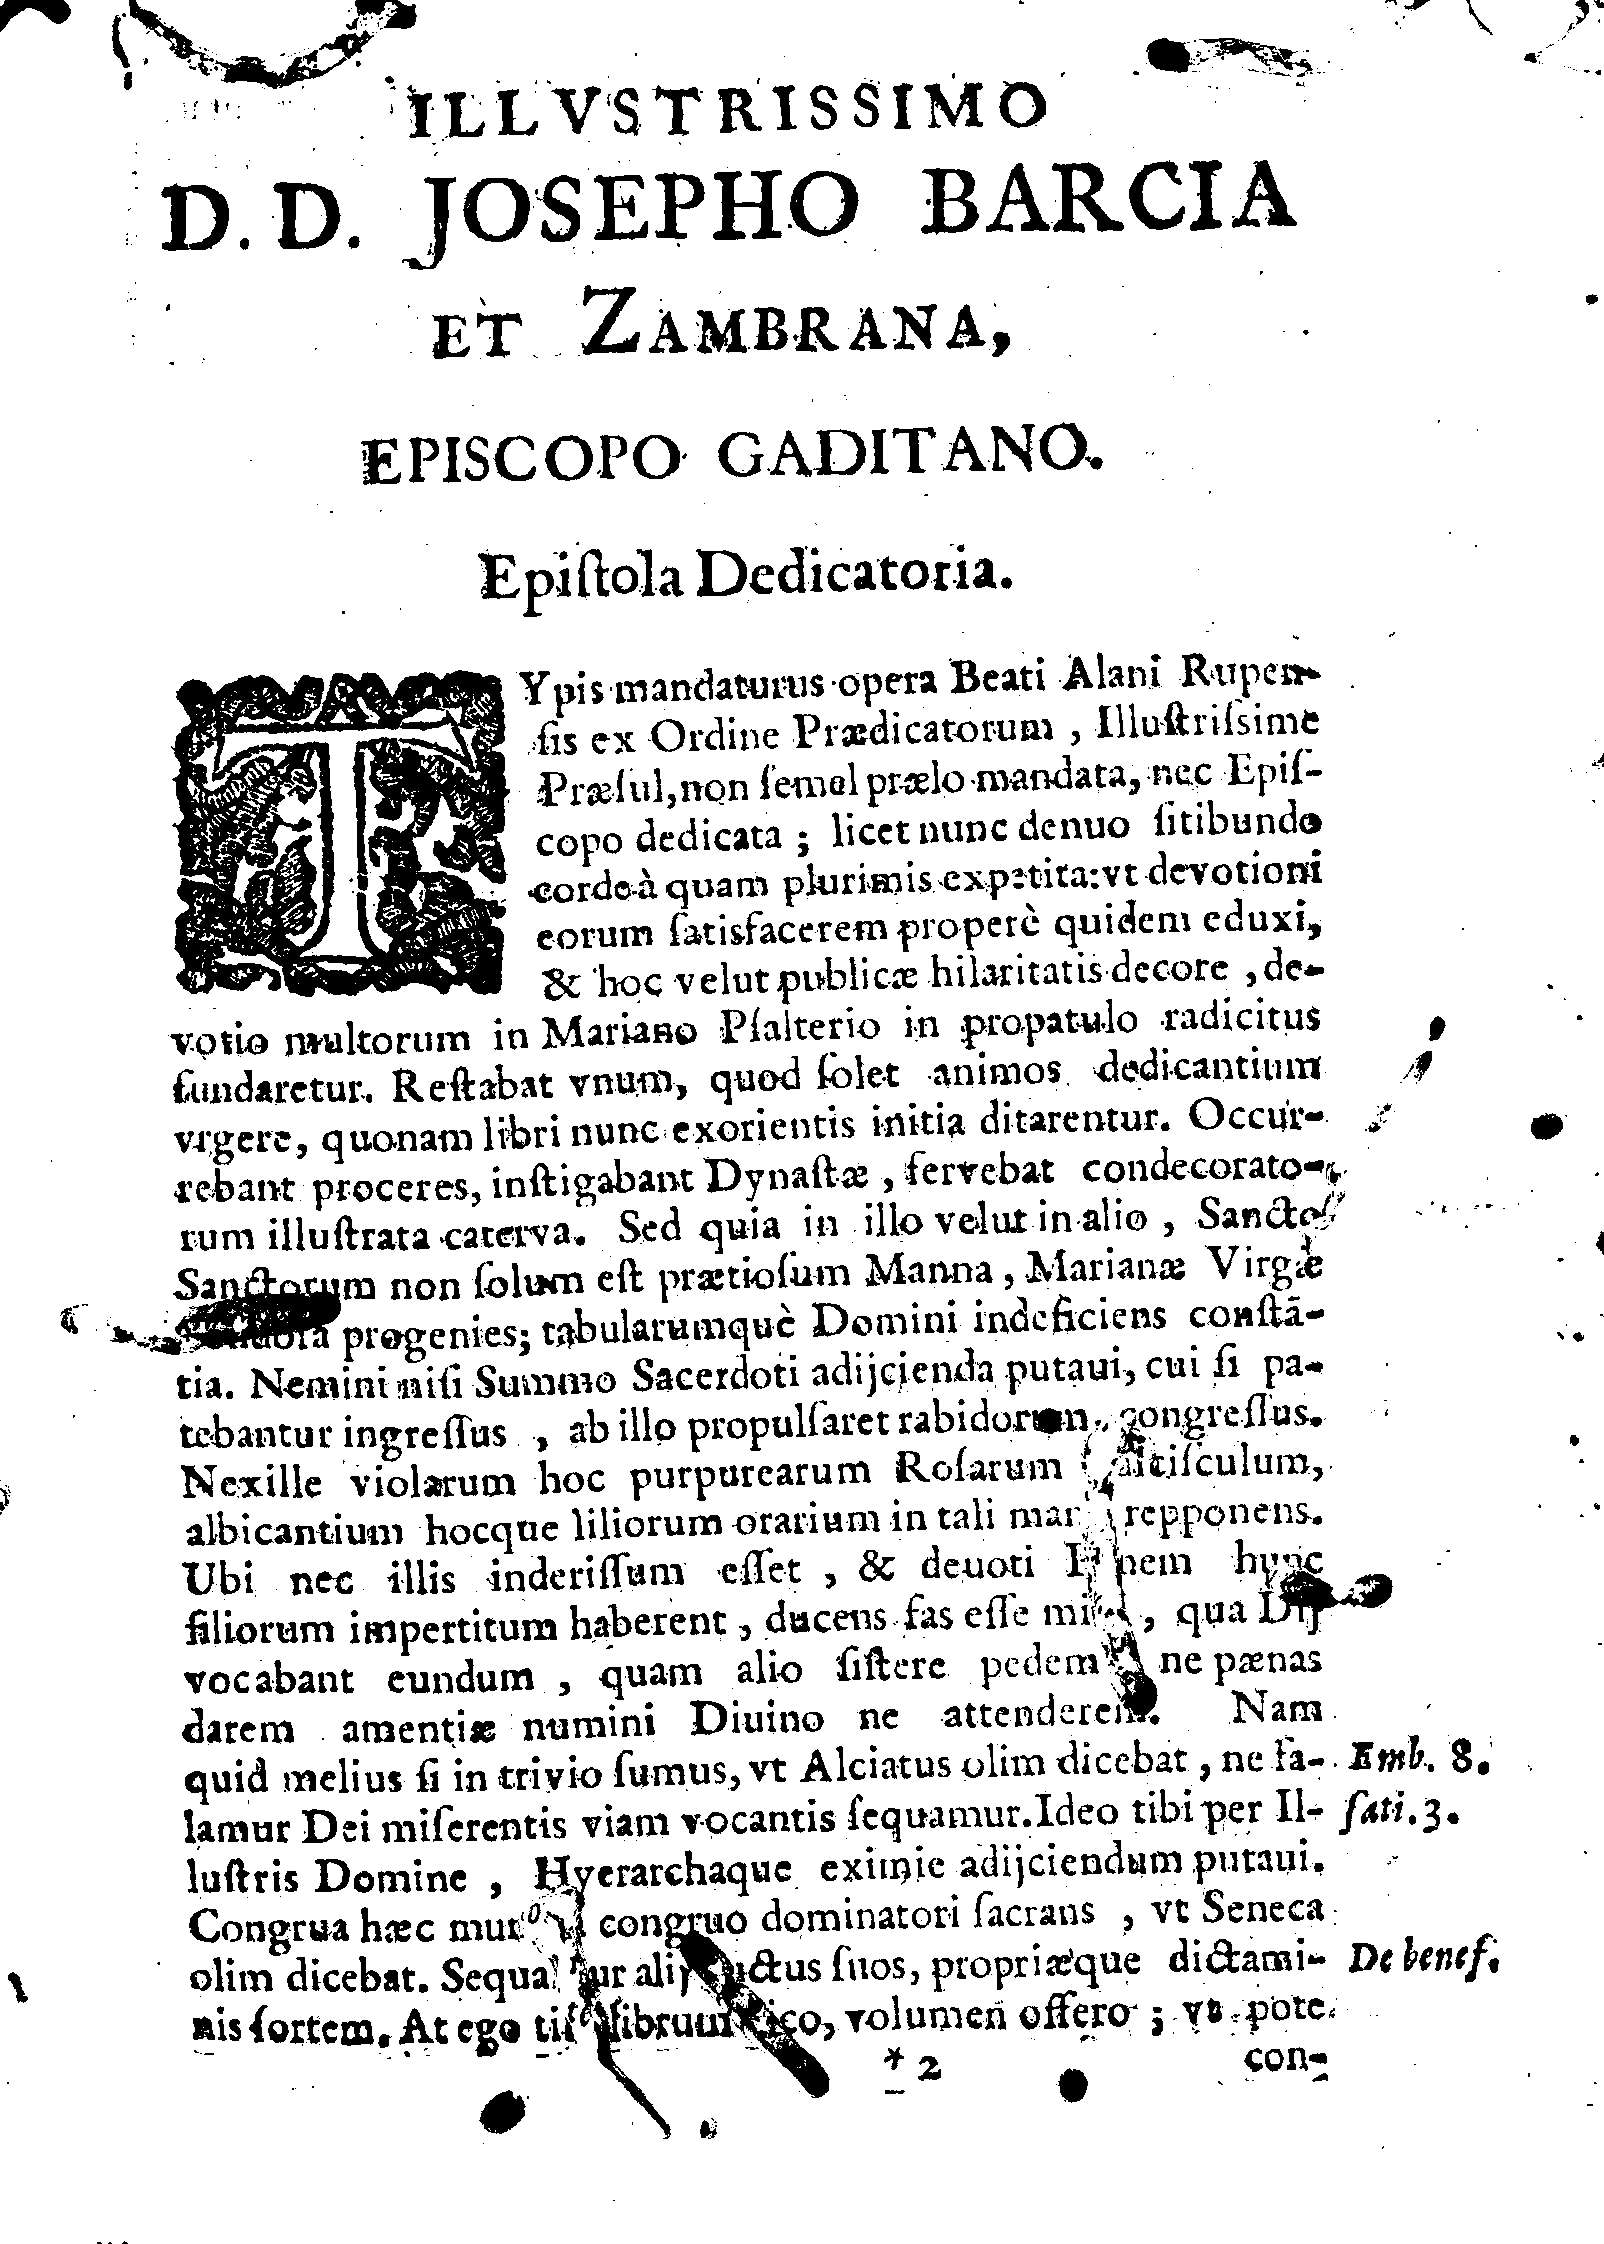 Illvstrissimo D.D. Josepho Barcia et Zambrana, Episcopio Gaditano.